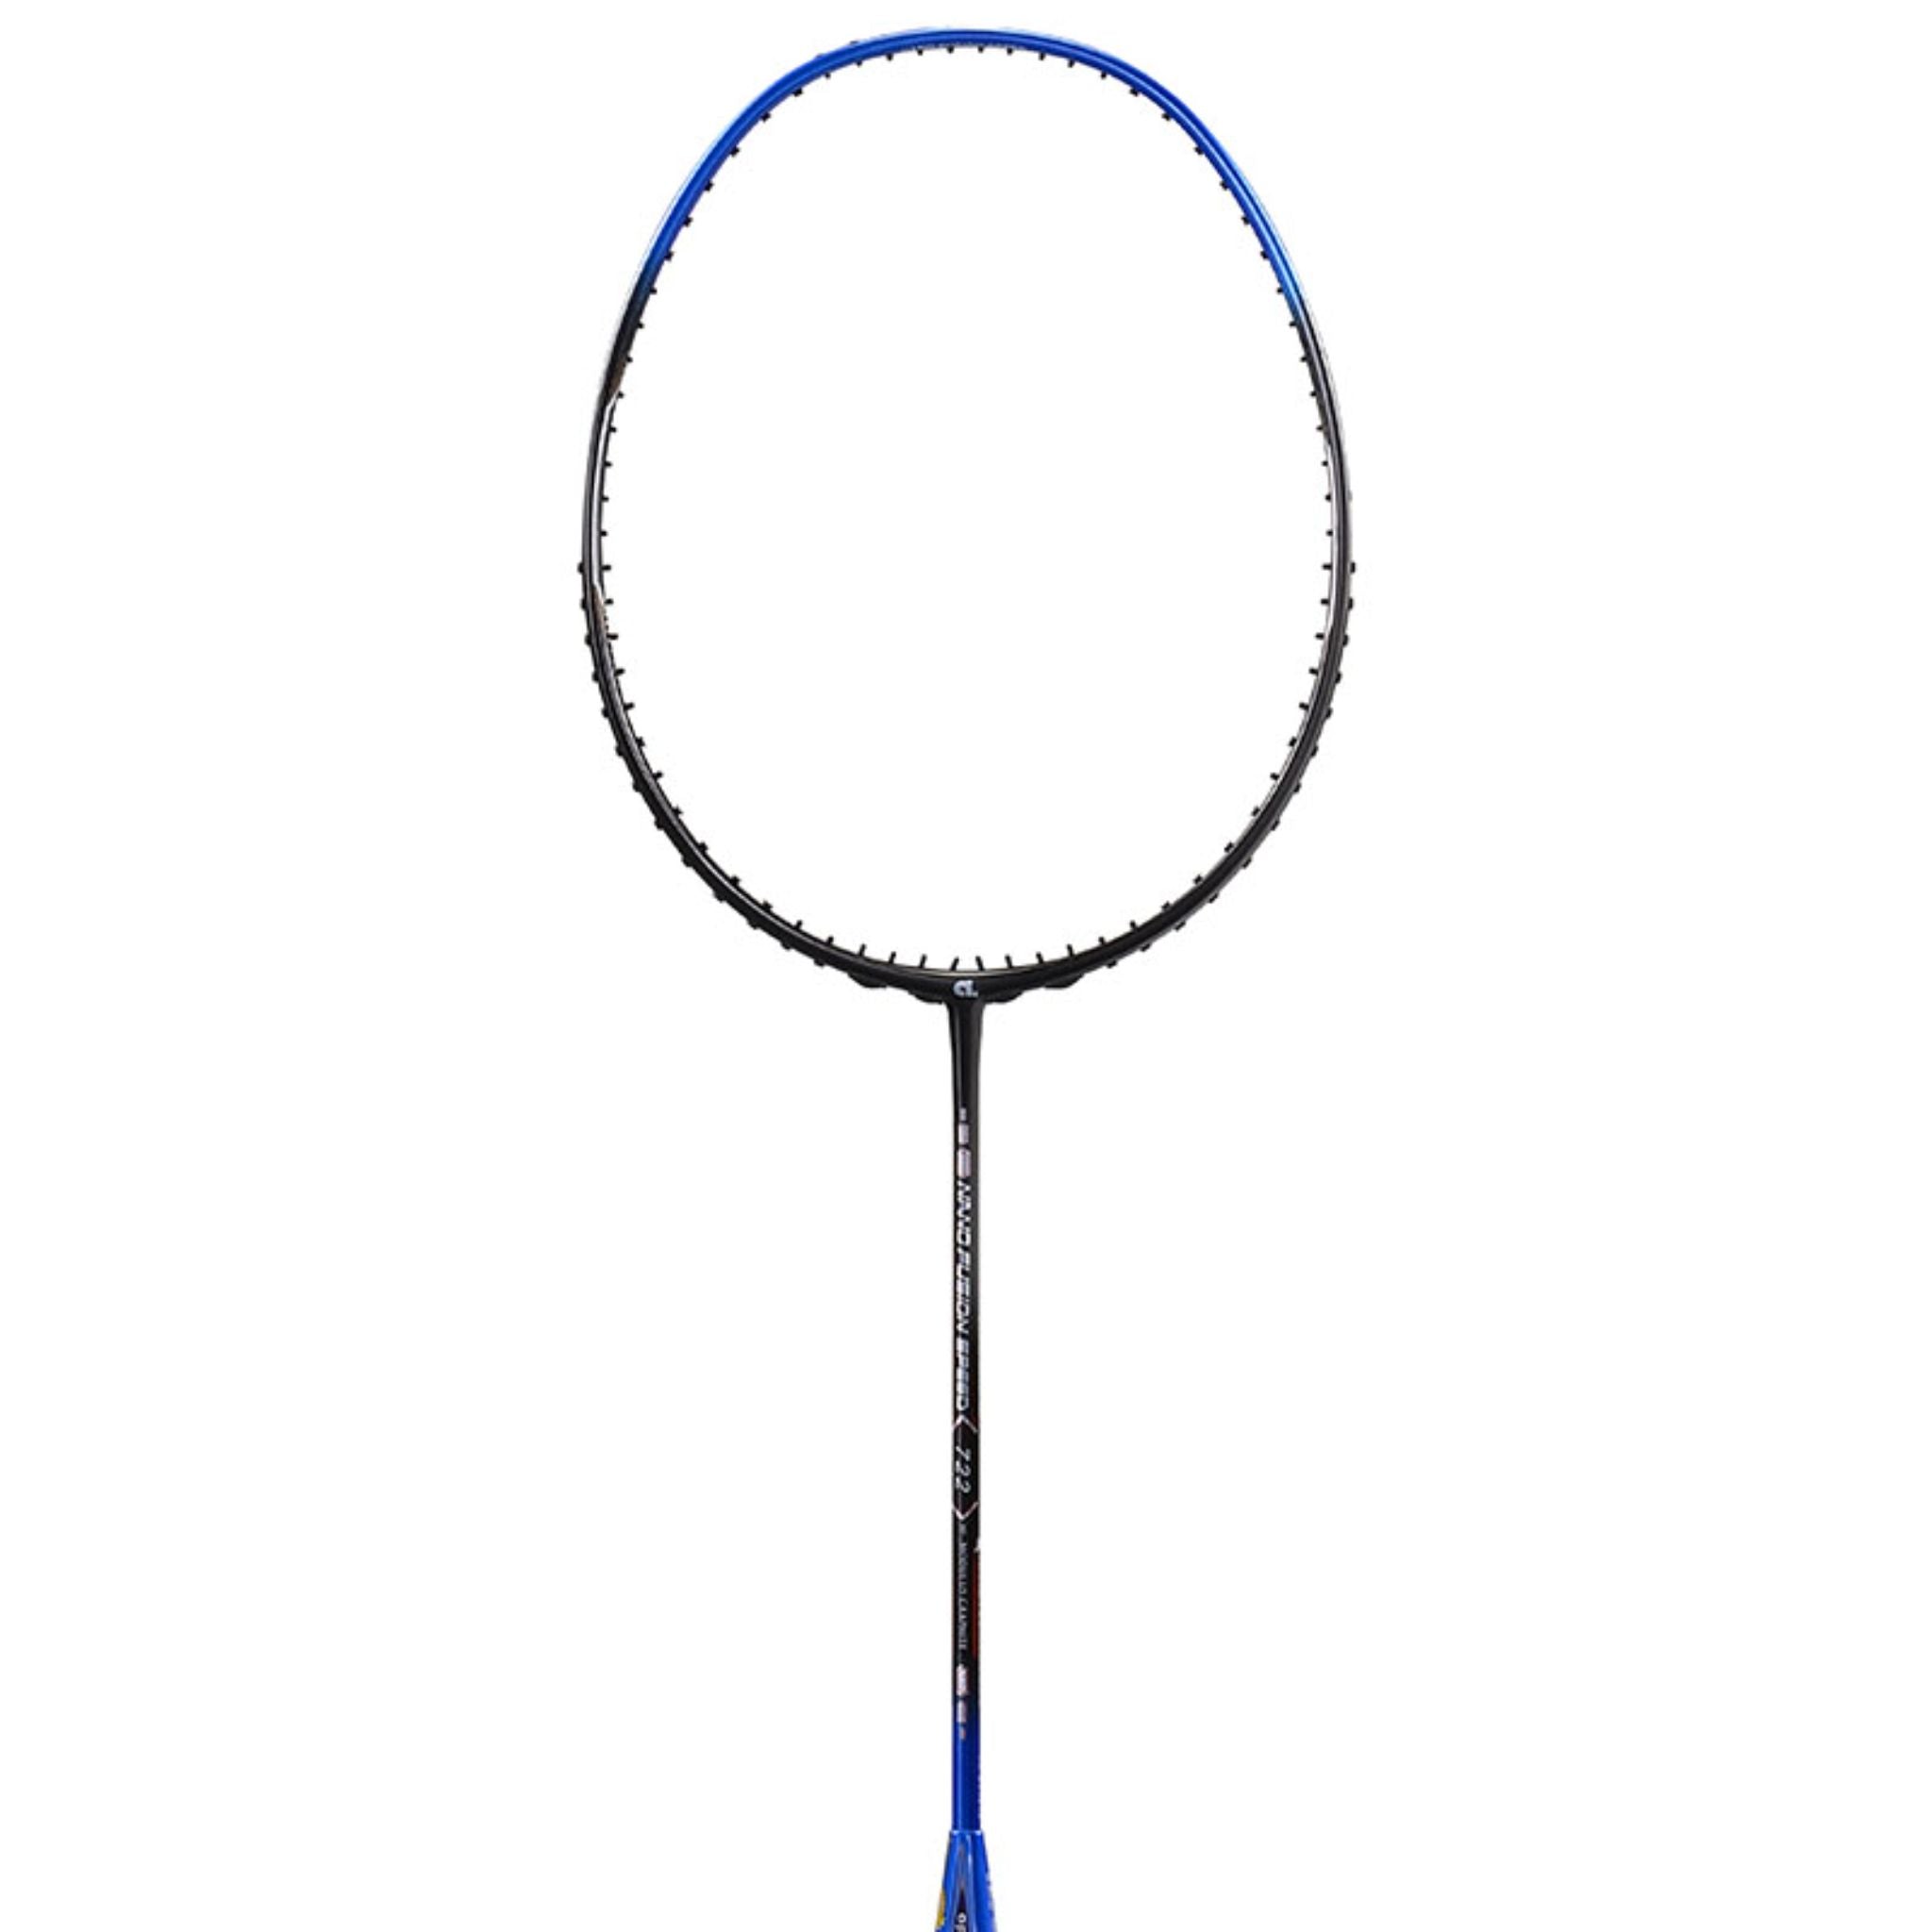 LI-NING Windstorm 75 White Badminton Racket - Unleash Power and Precision